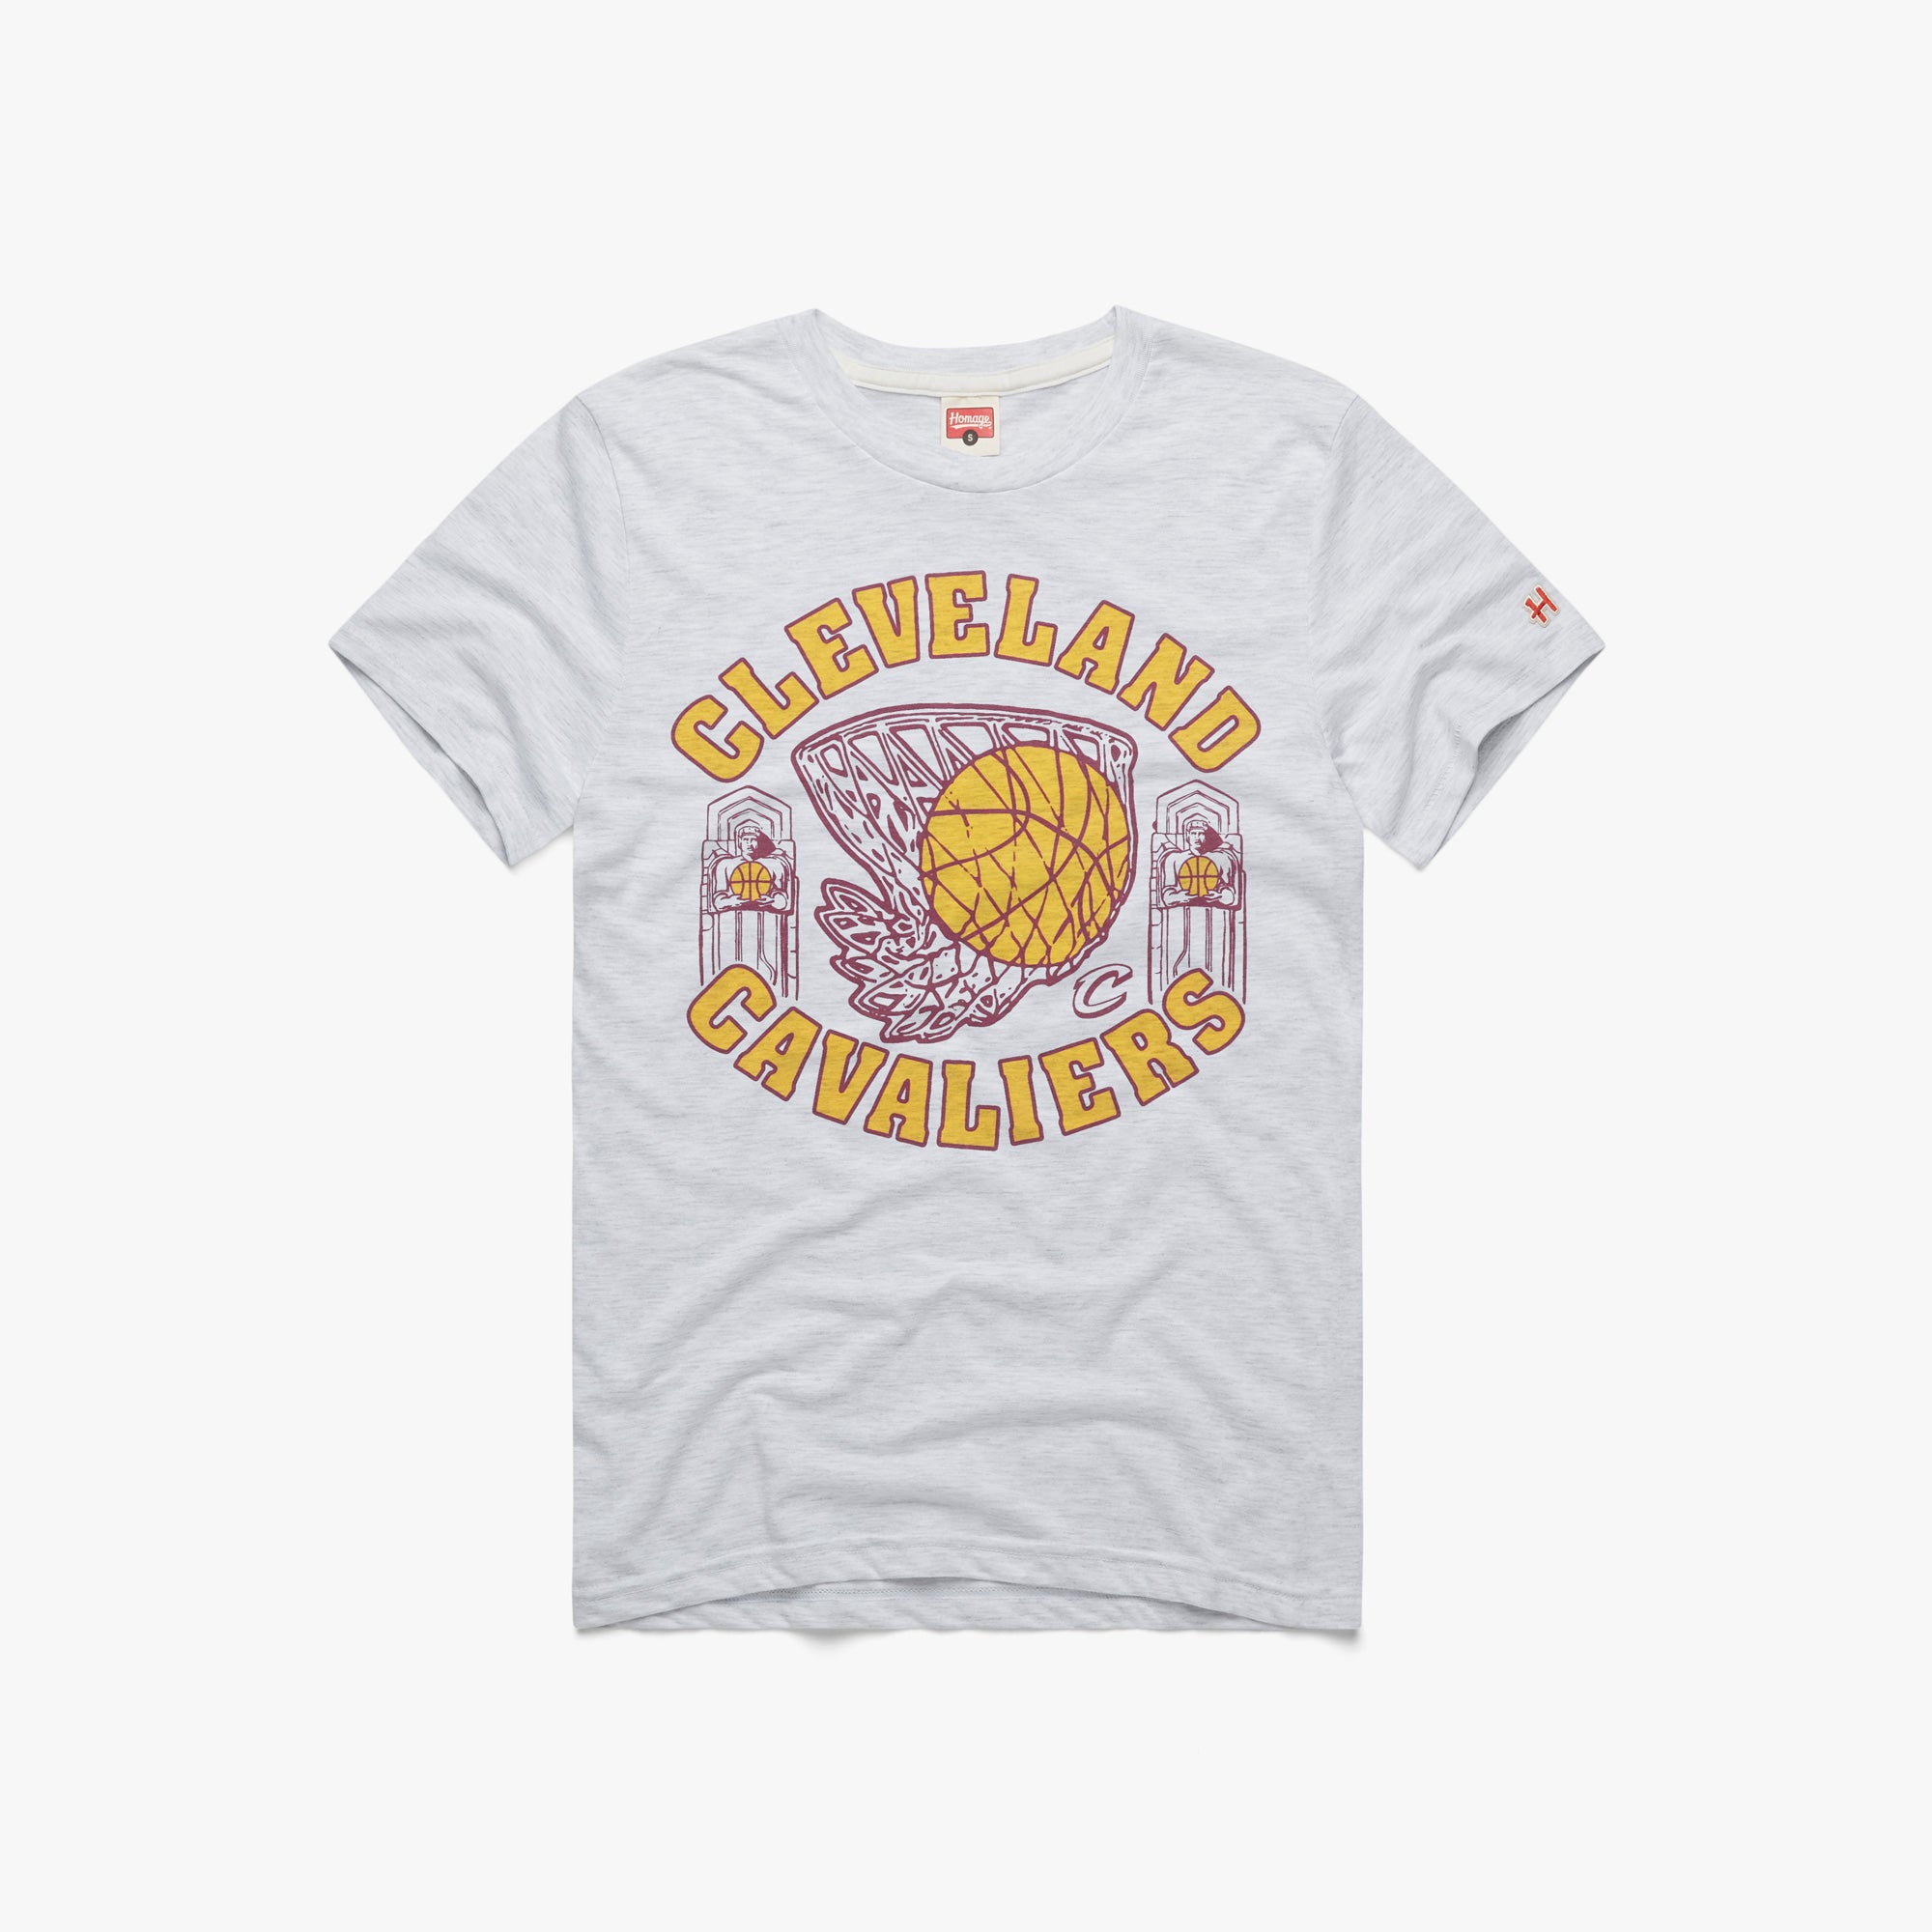 cleveland cavaliers shirt design